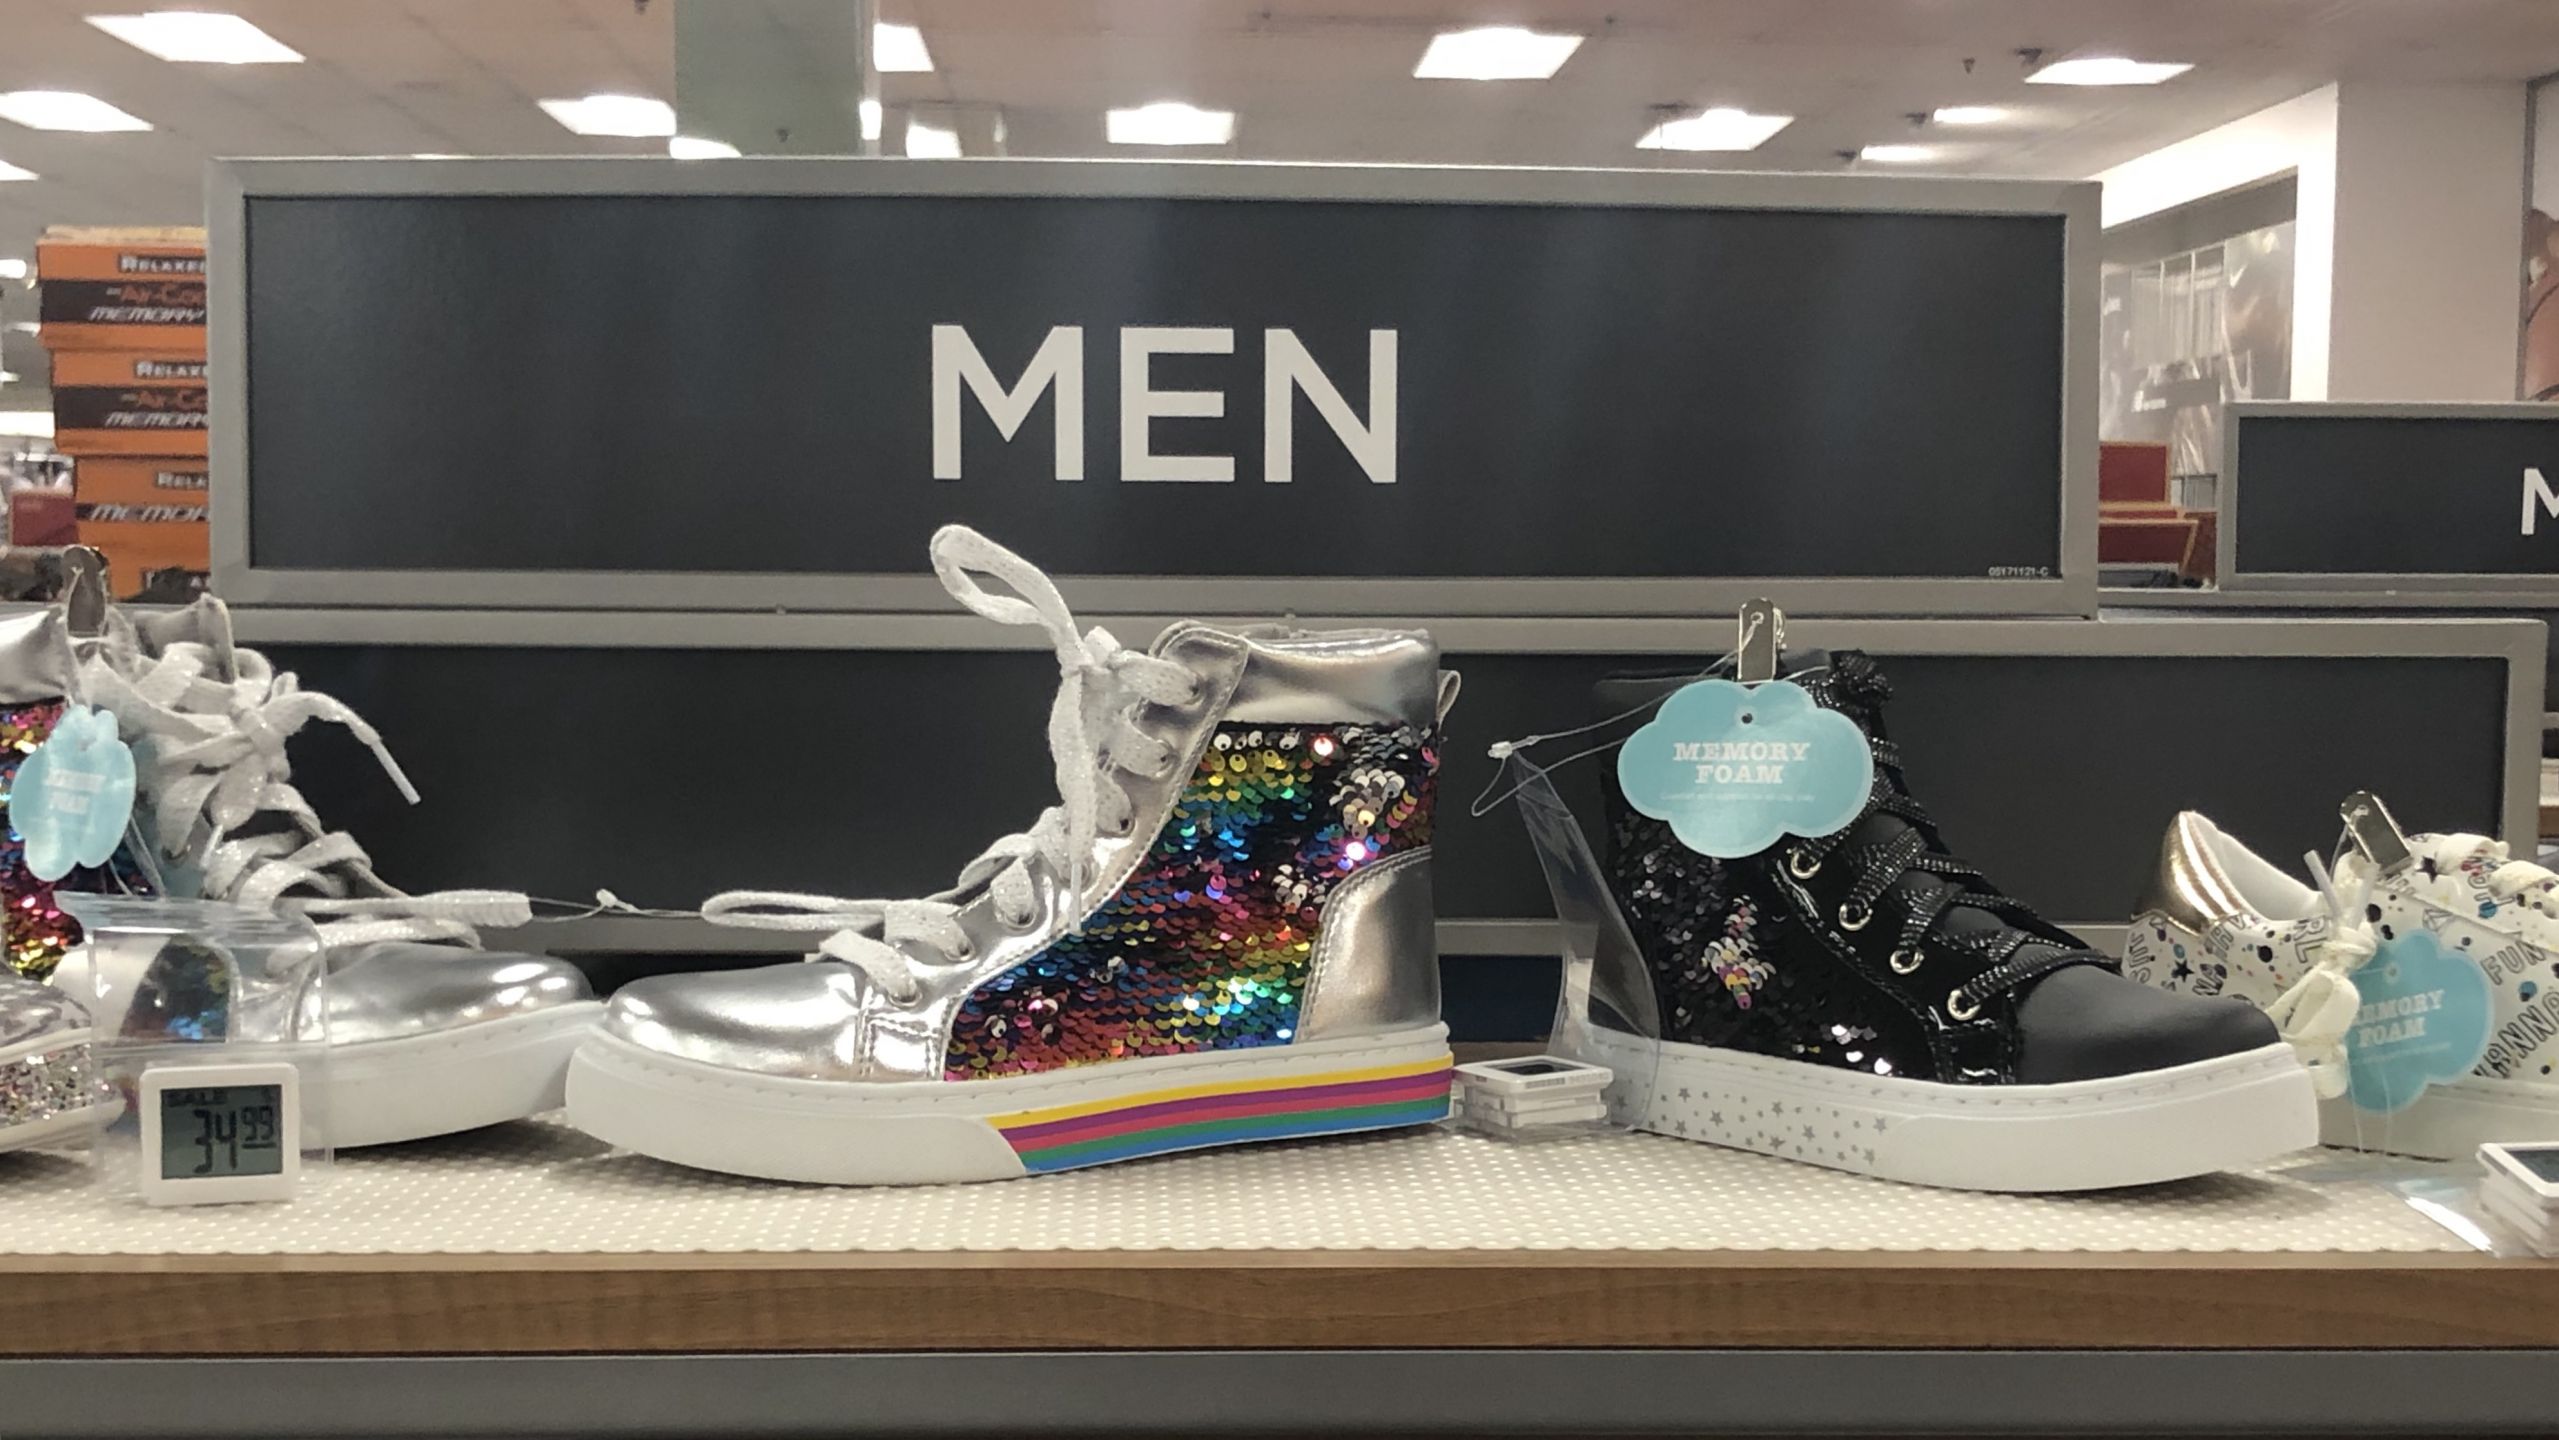 Men’s shoes Blank Meme Template